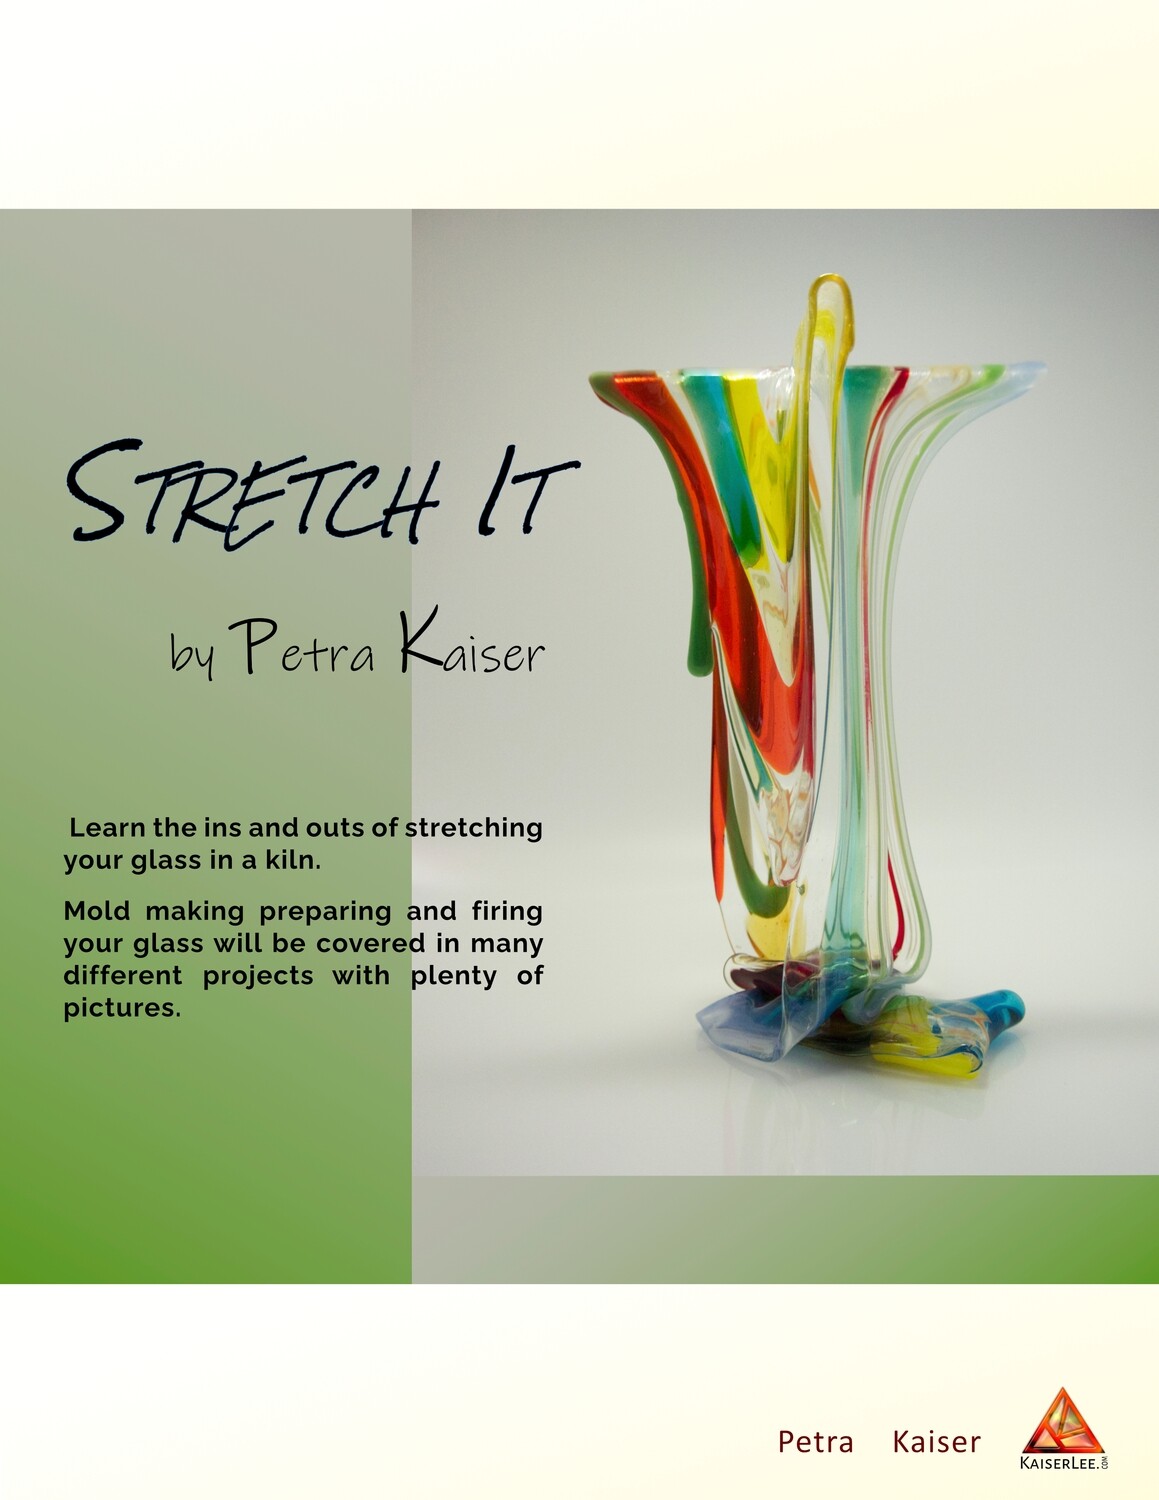 Stretch It - e-book by Petra Kaiser